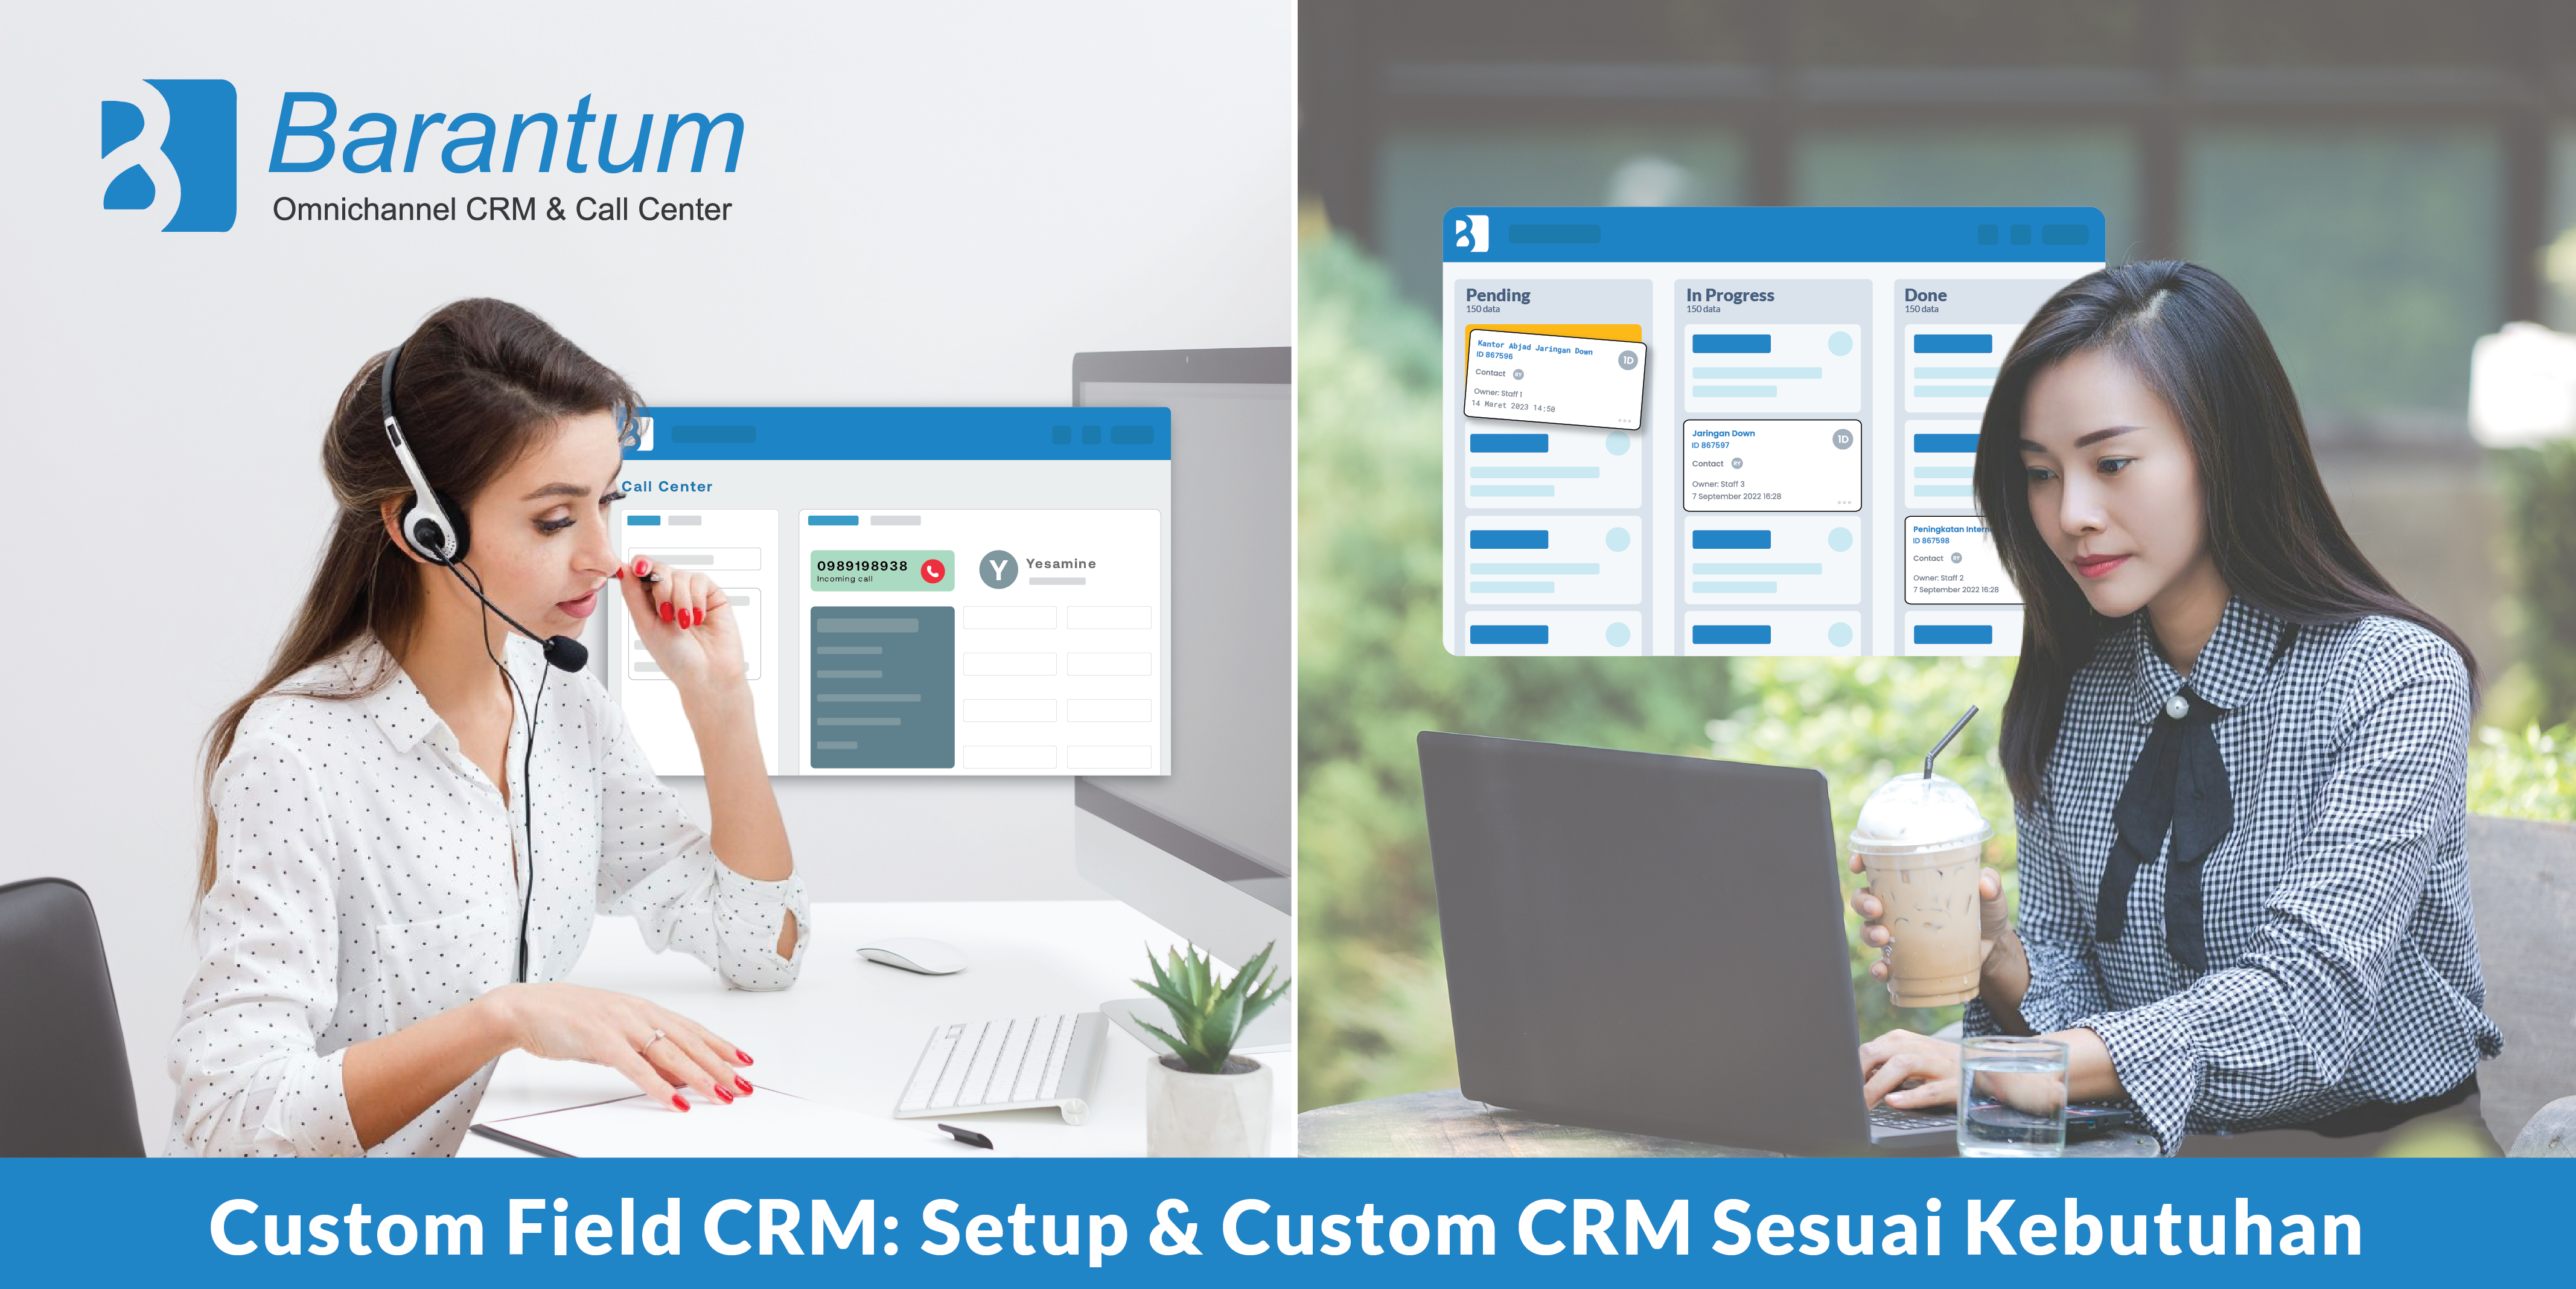 custom filed CRM - Barantum